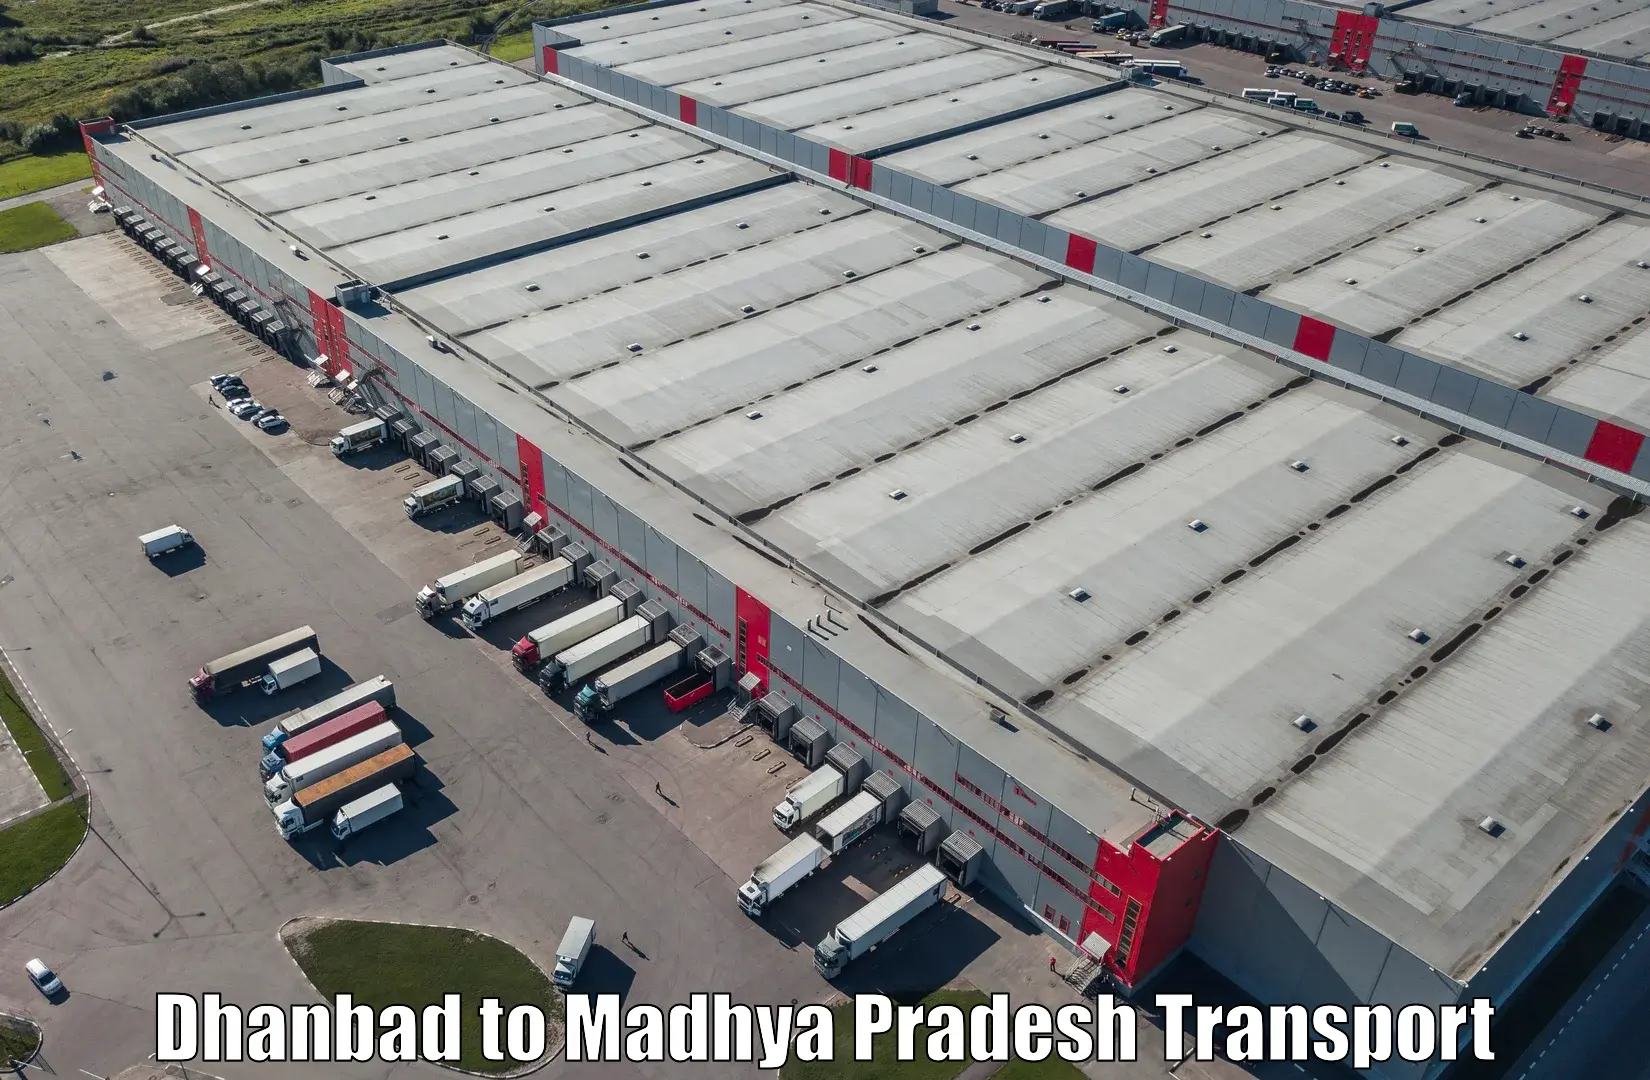 Furniture transport service Dhanbad to Maheshwar